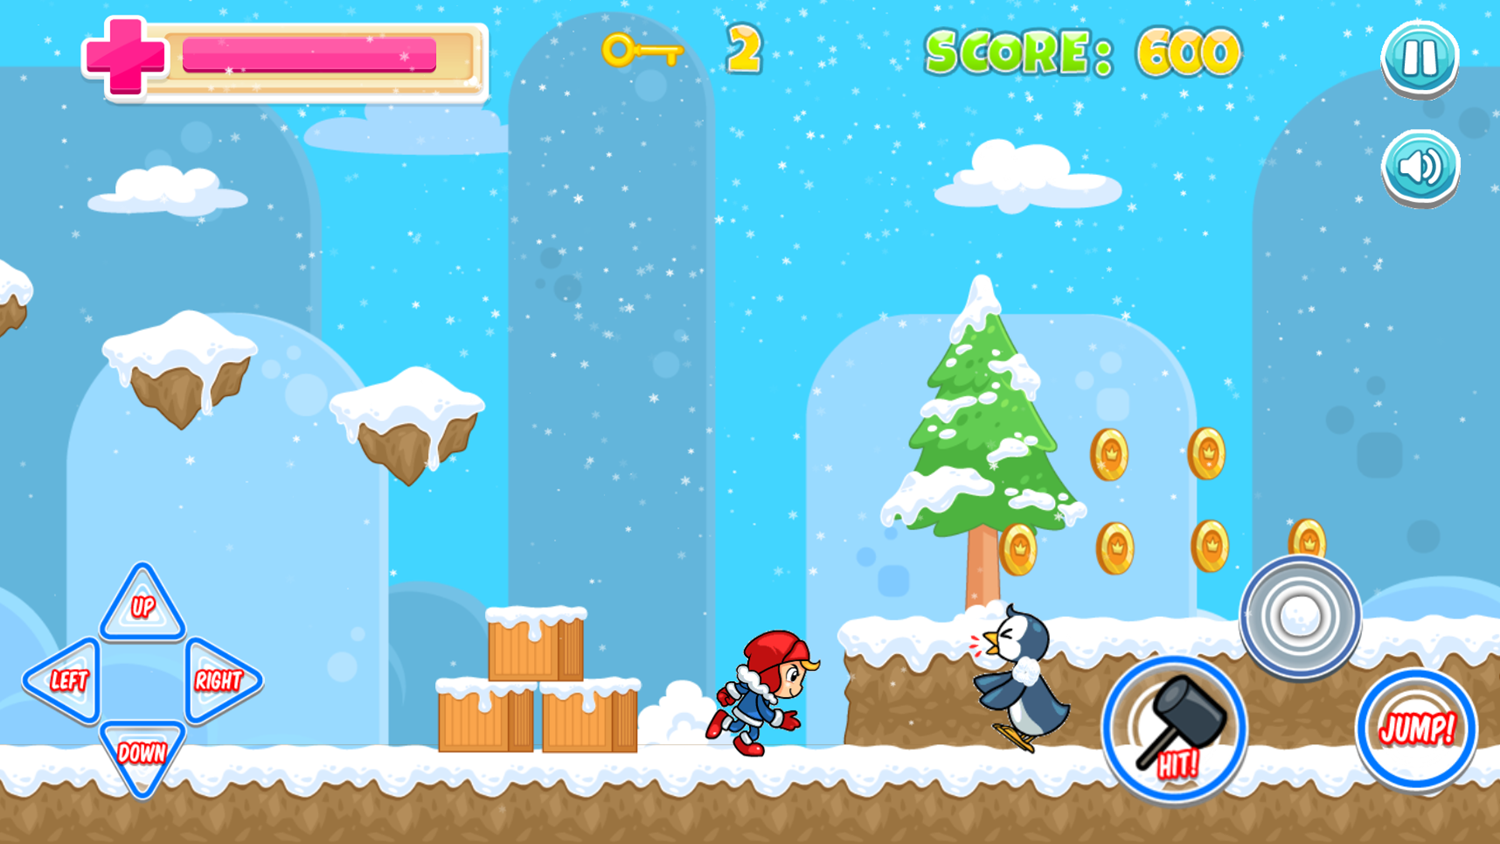 Iceland Adventure 2 Game Level Play Screenshot.